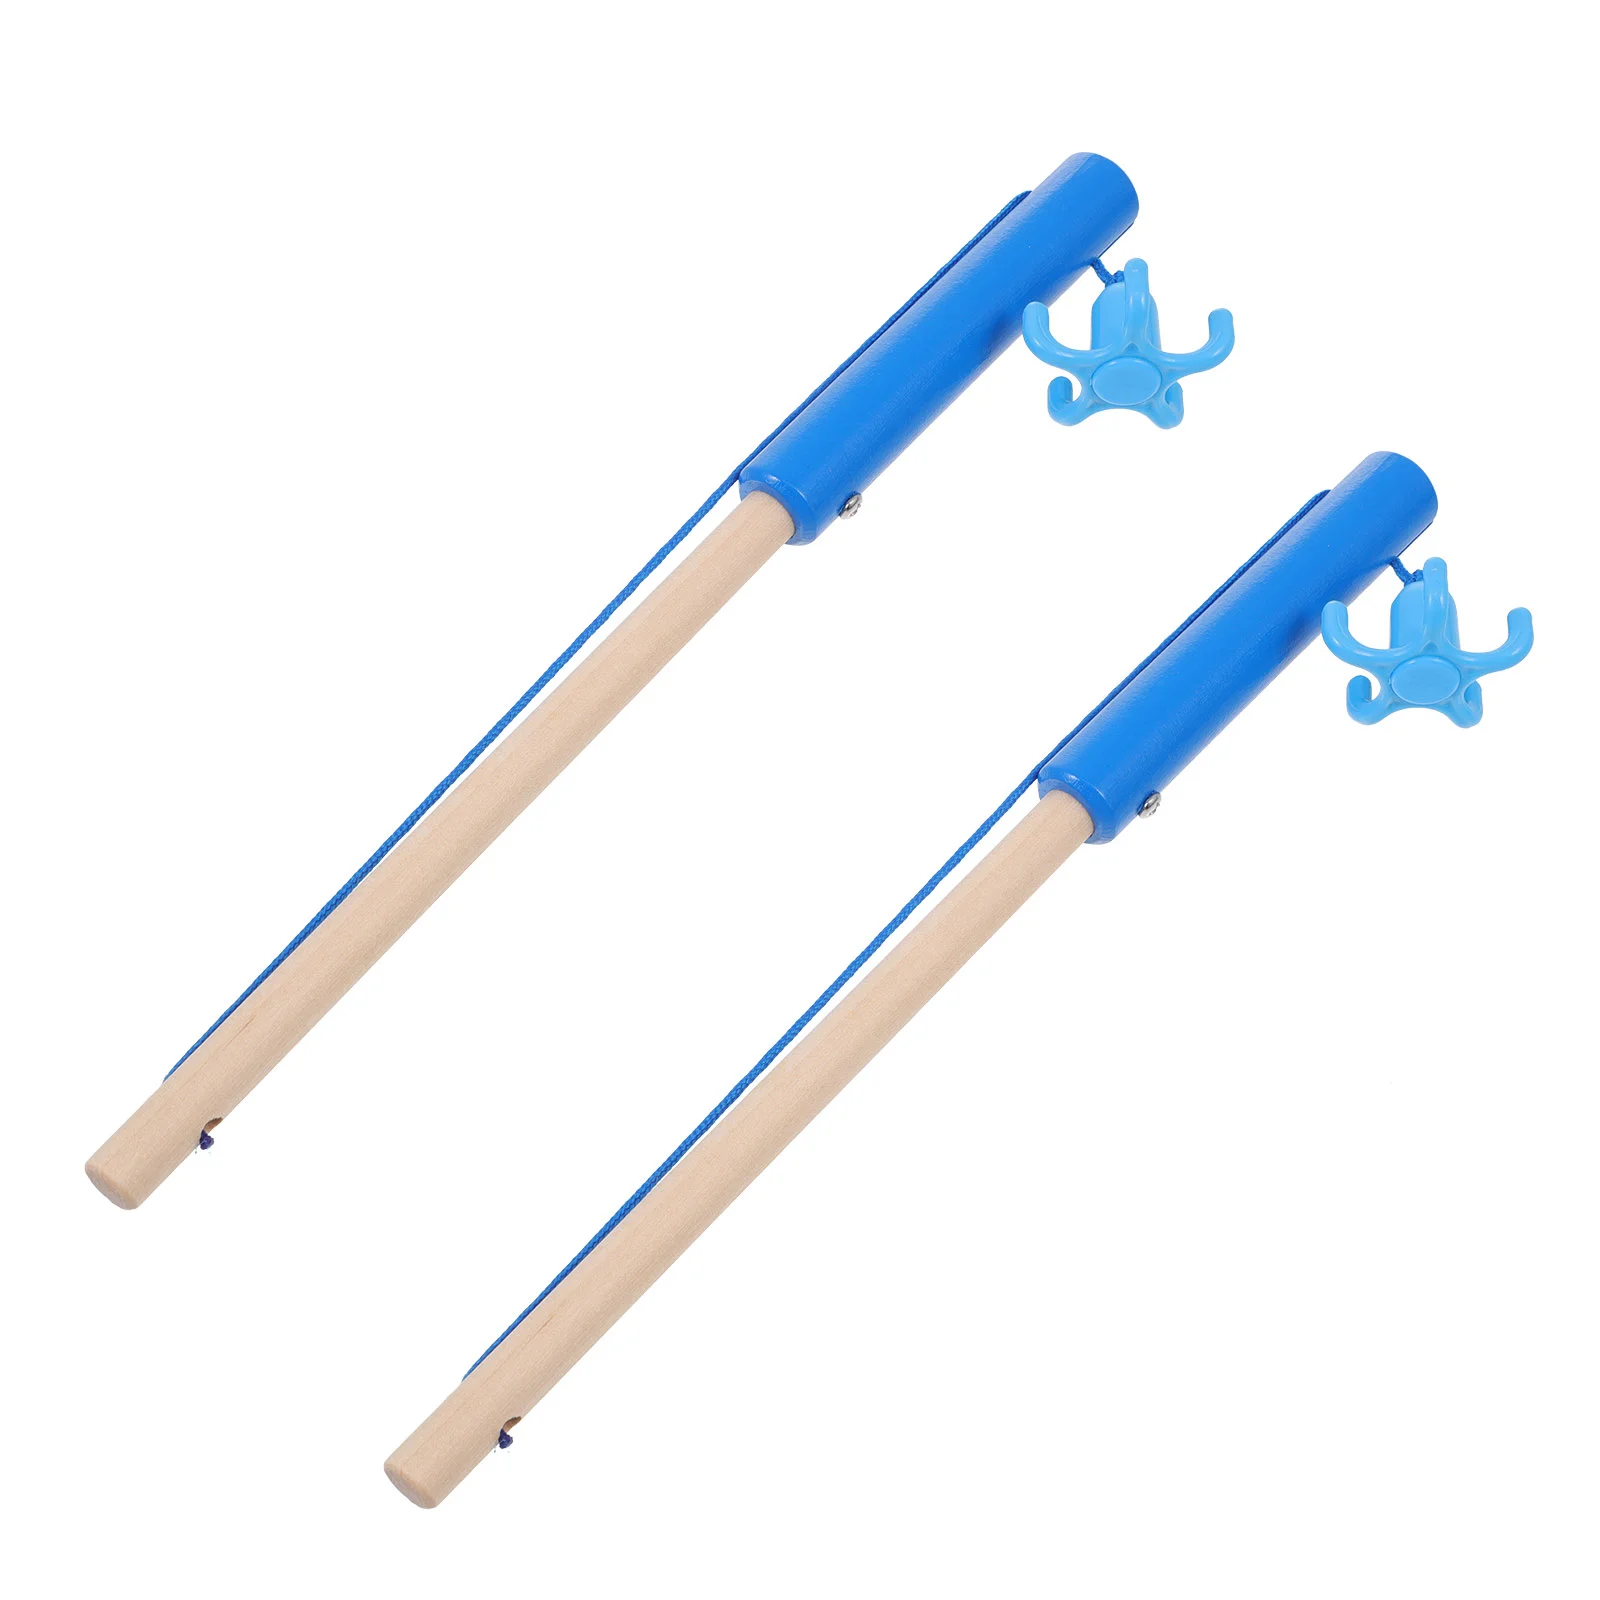 

2 Pcs Children's Fishing Rod Kids Wooden Toys Magnetic Joysticks Pole Dual Purpose Game Creative